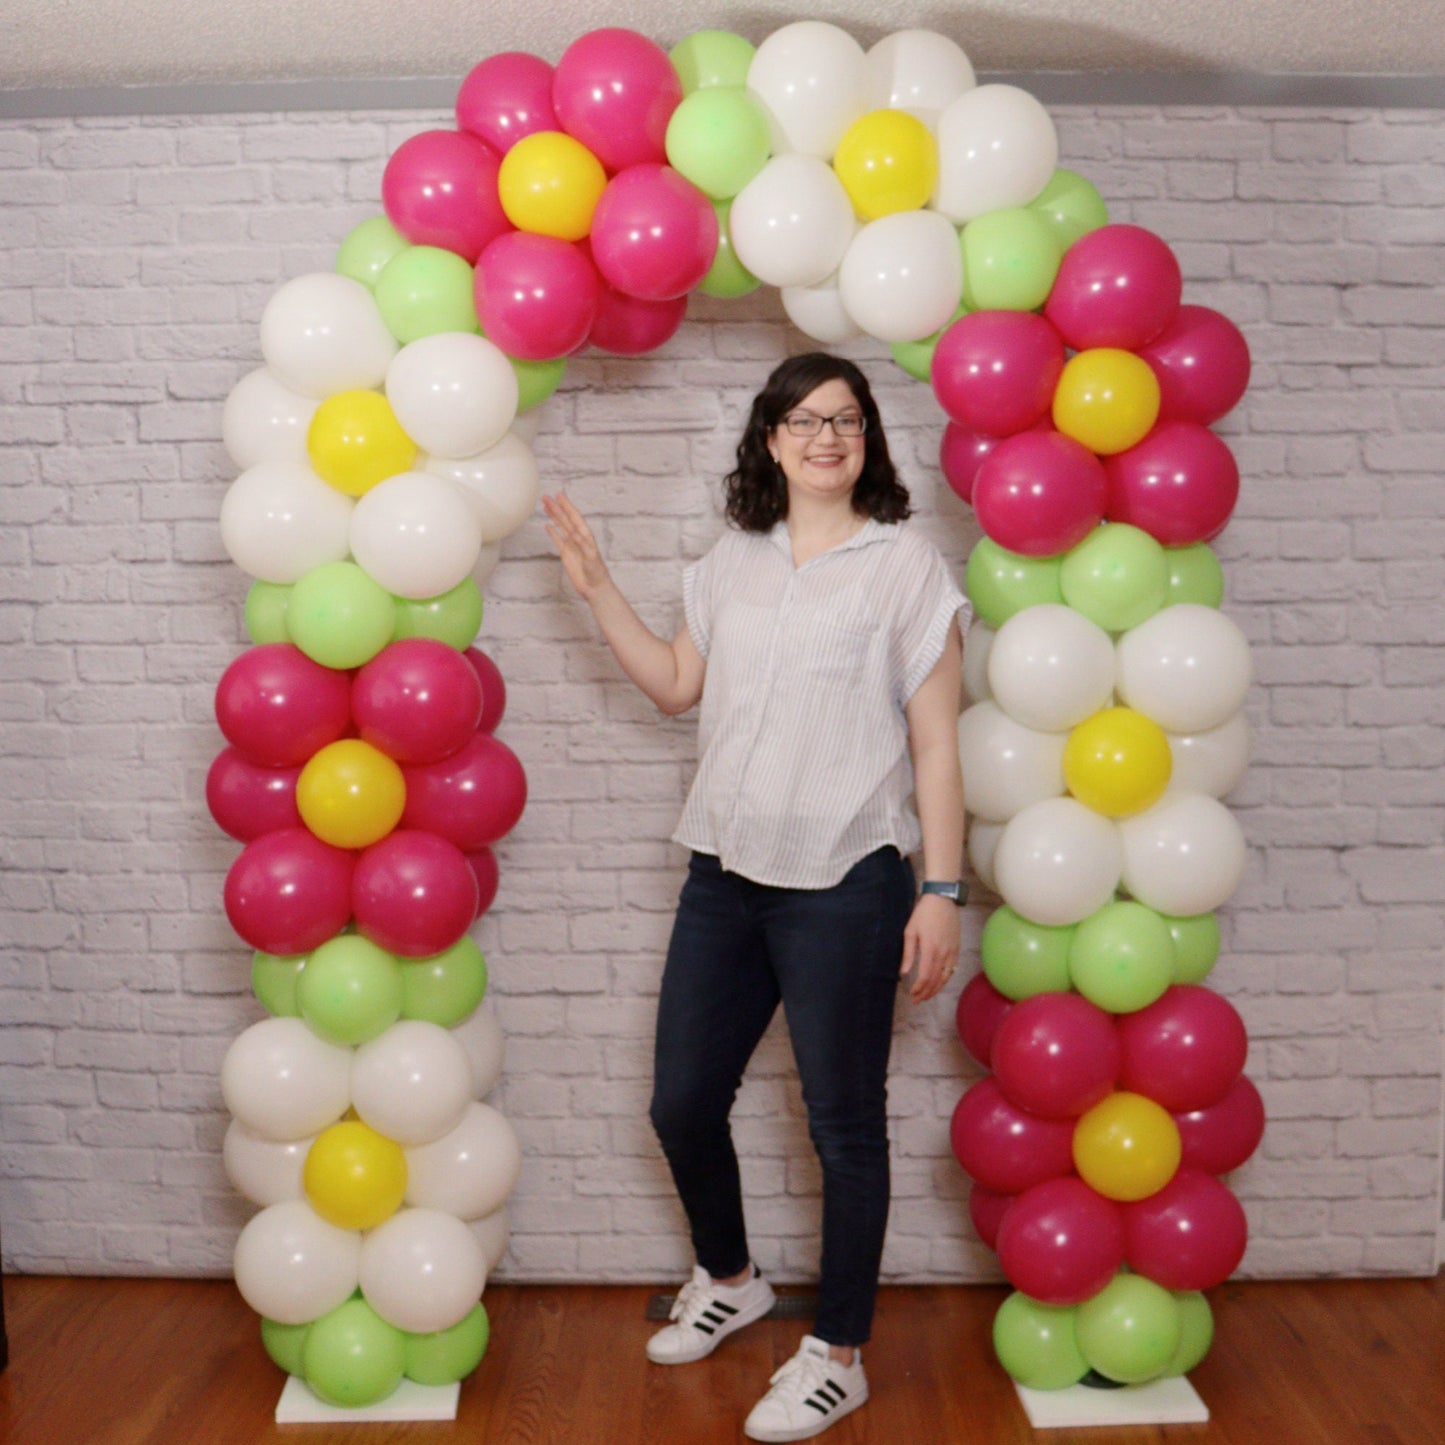 Balloon Flower Arch Tutorial and Plans | Digital Balloon Recipe